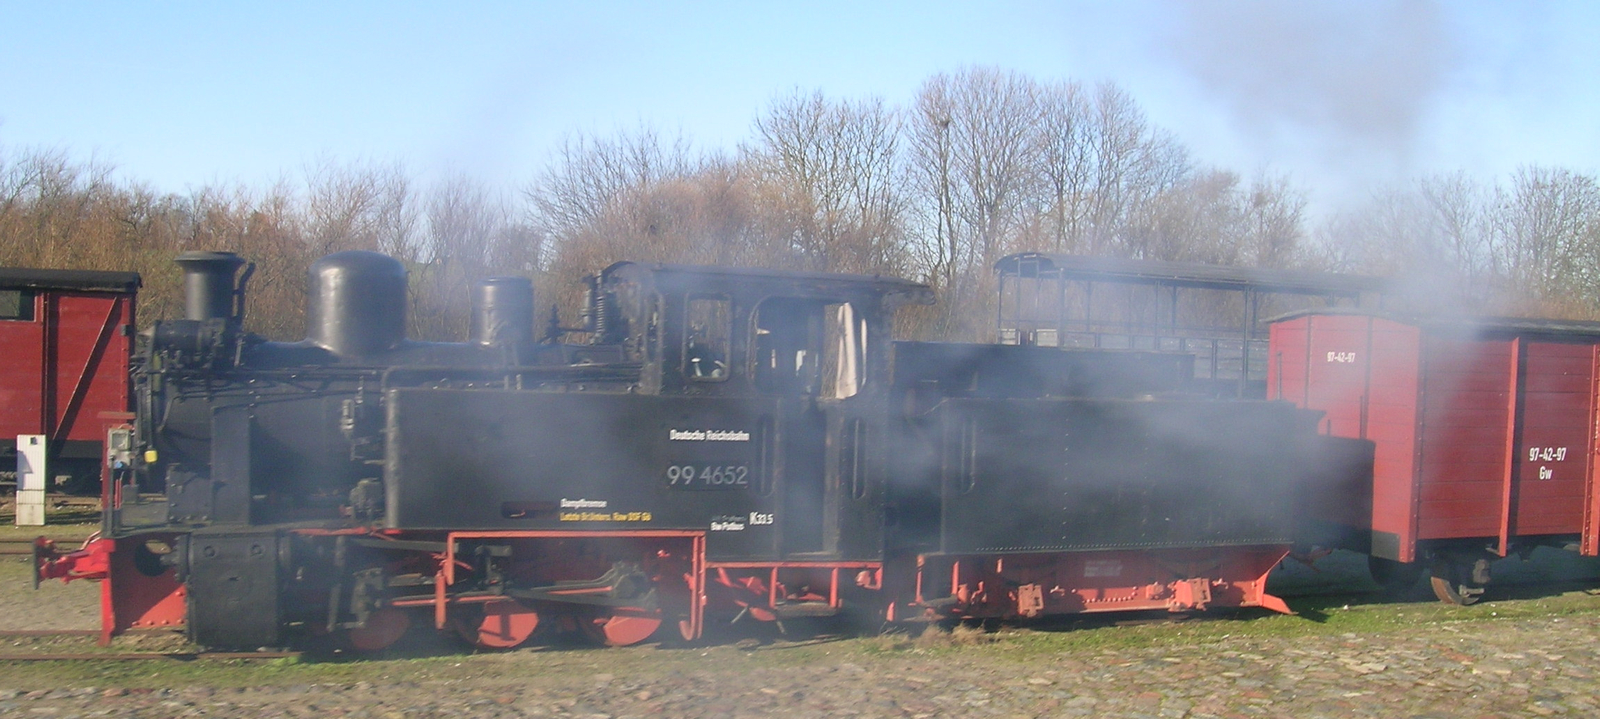 99 4652 of the Rügen Light Railway in January 2005 in Putbus